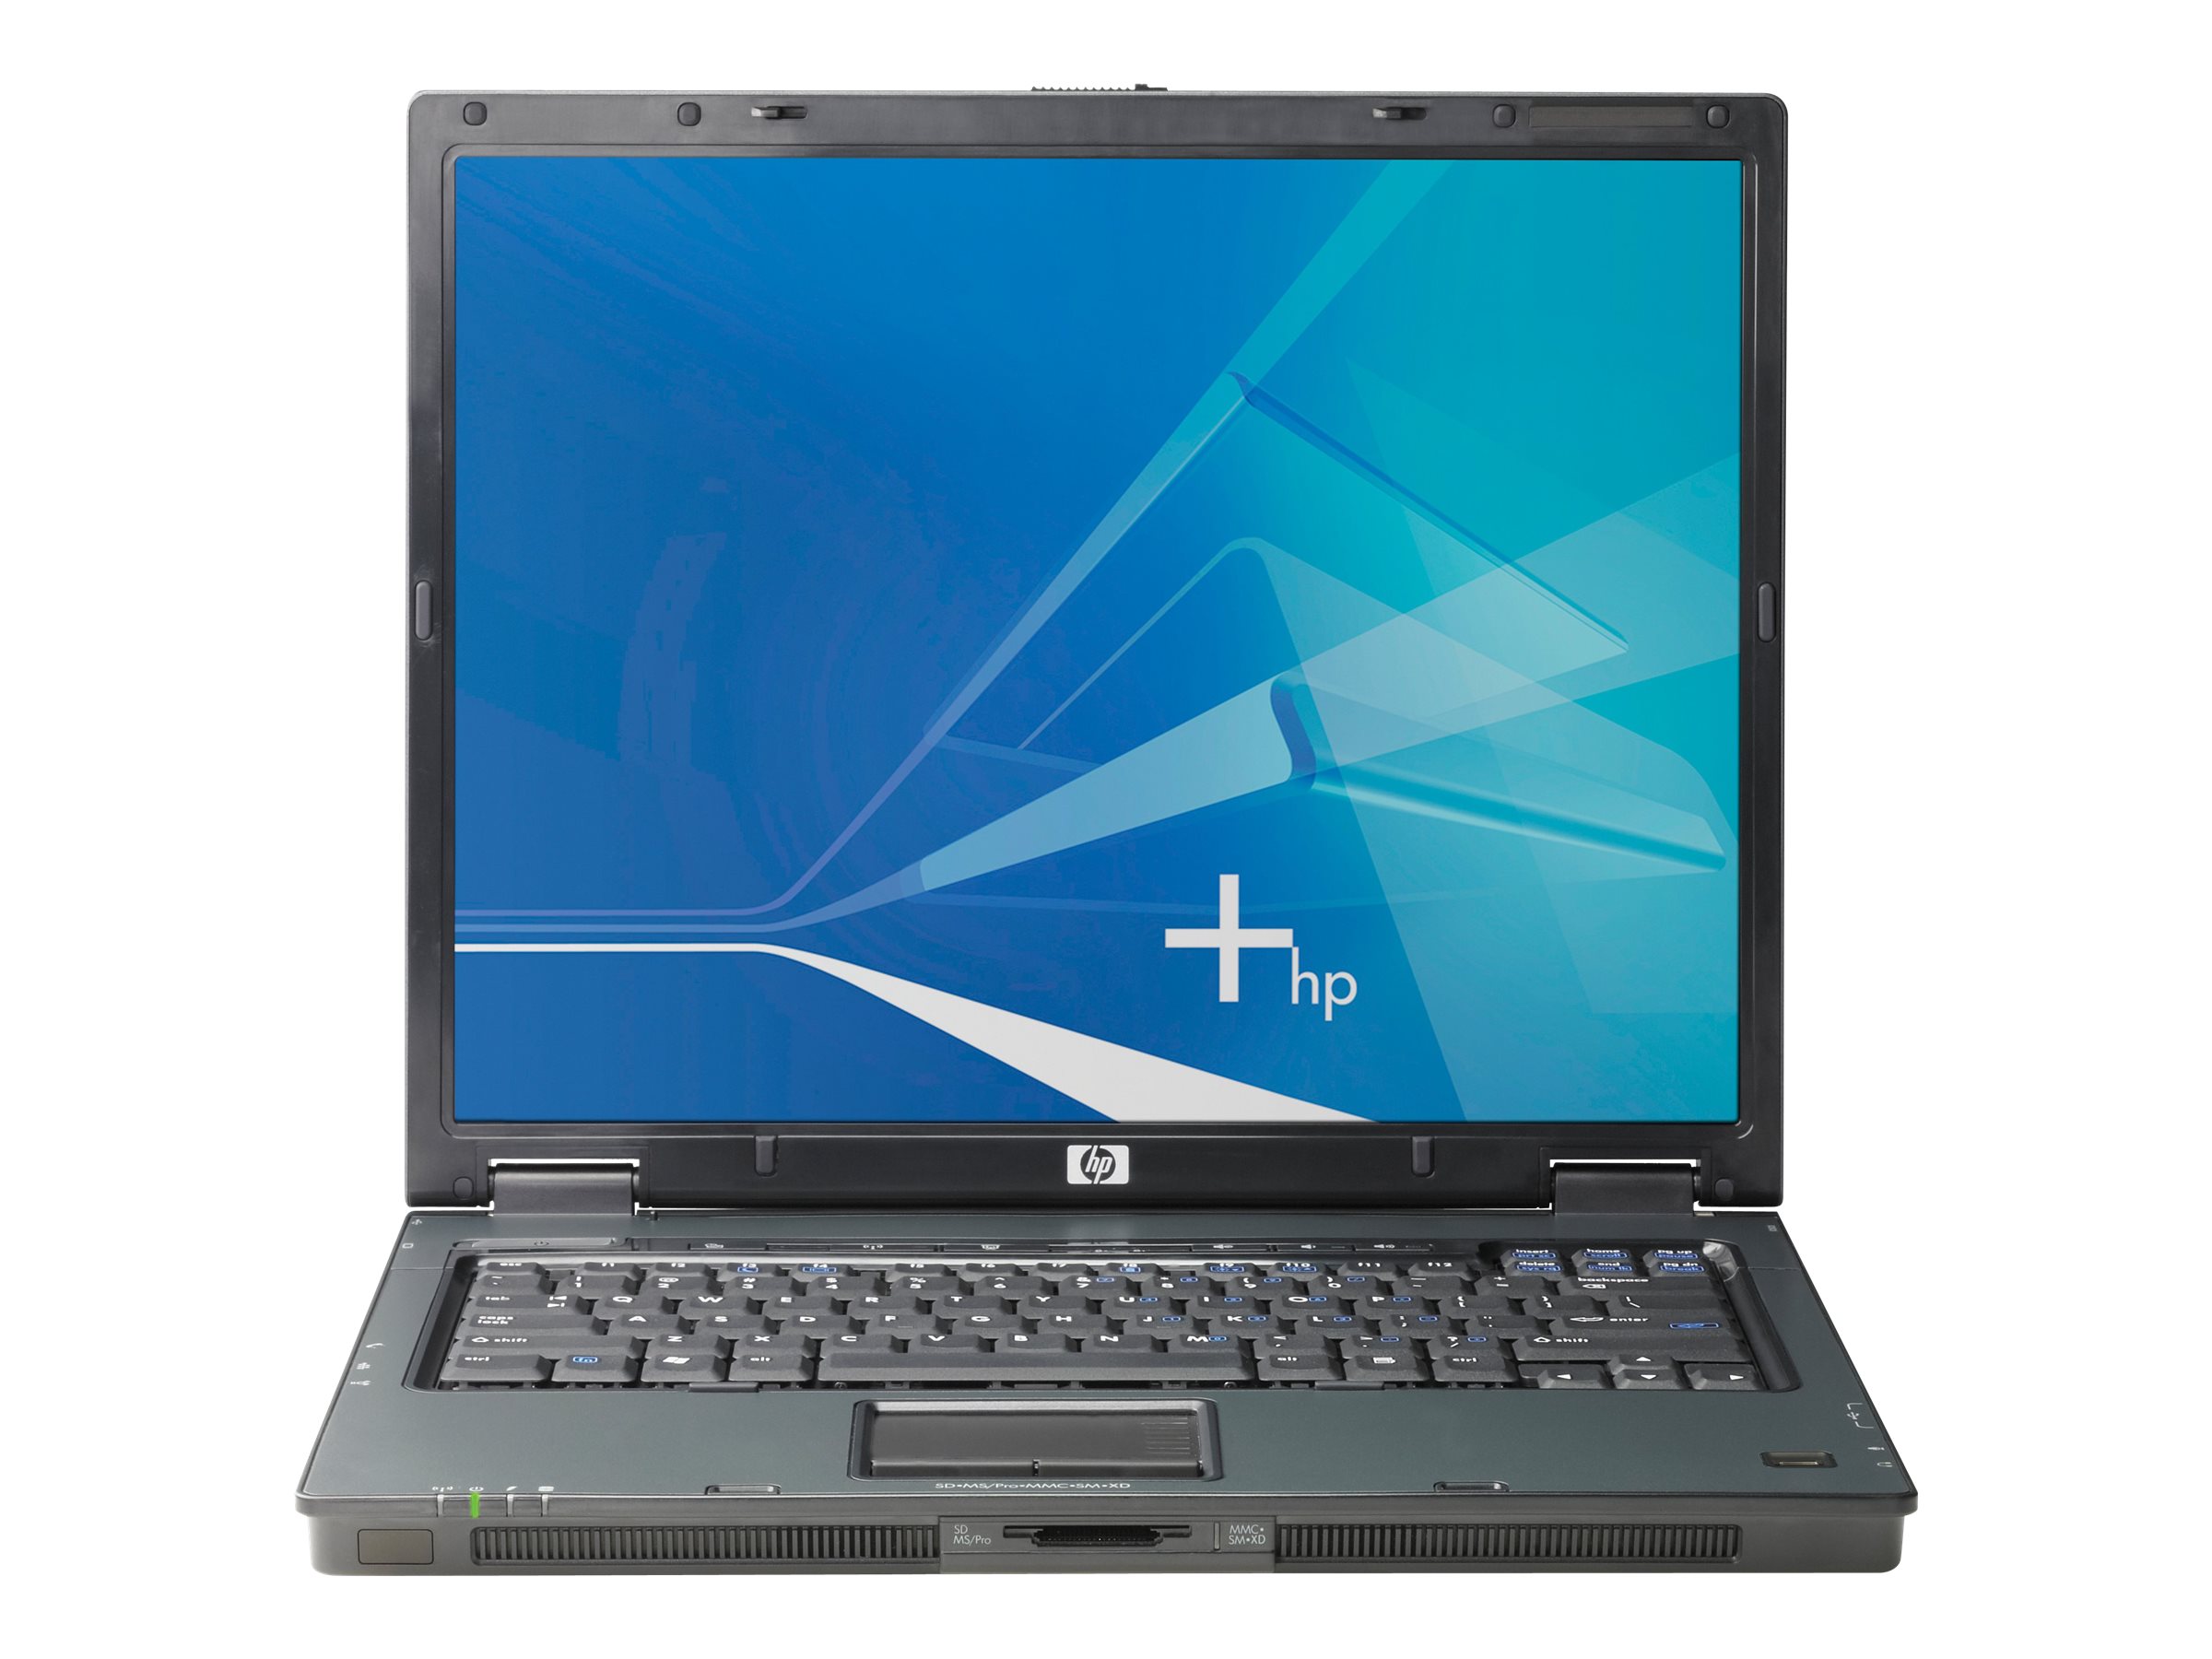 HP Compaq Business Notebook nc6220